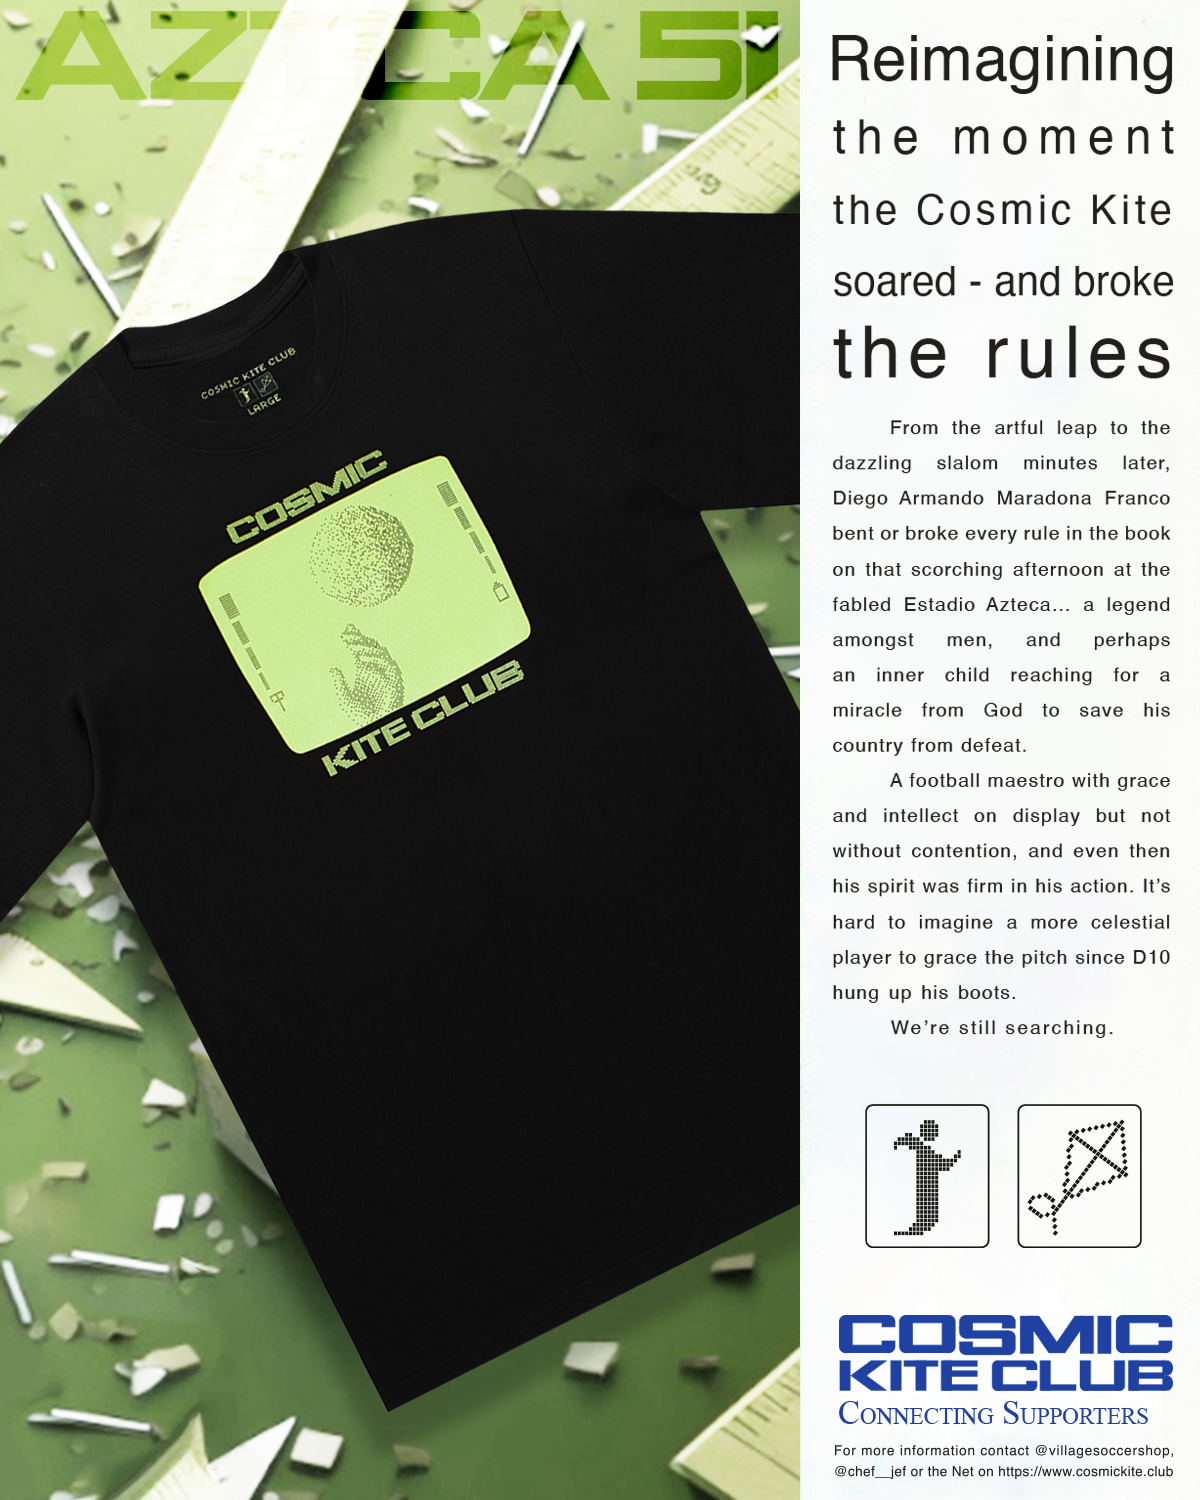 Cosmic Kite Club 